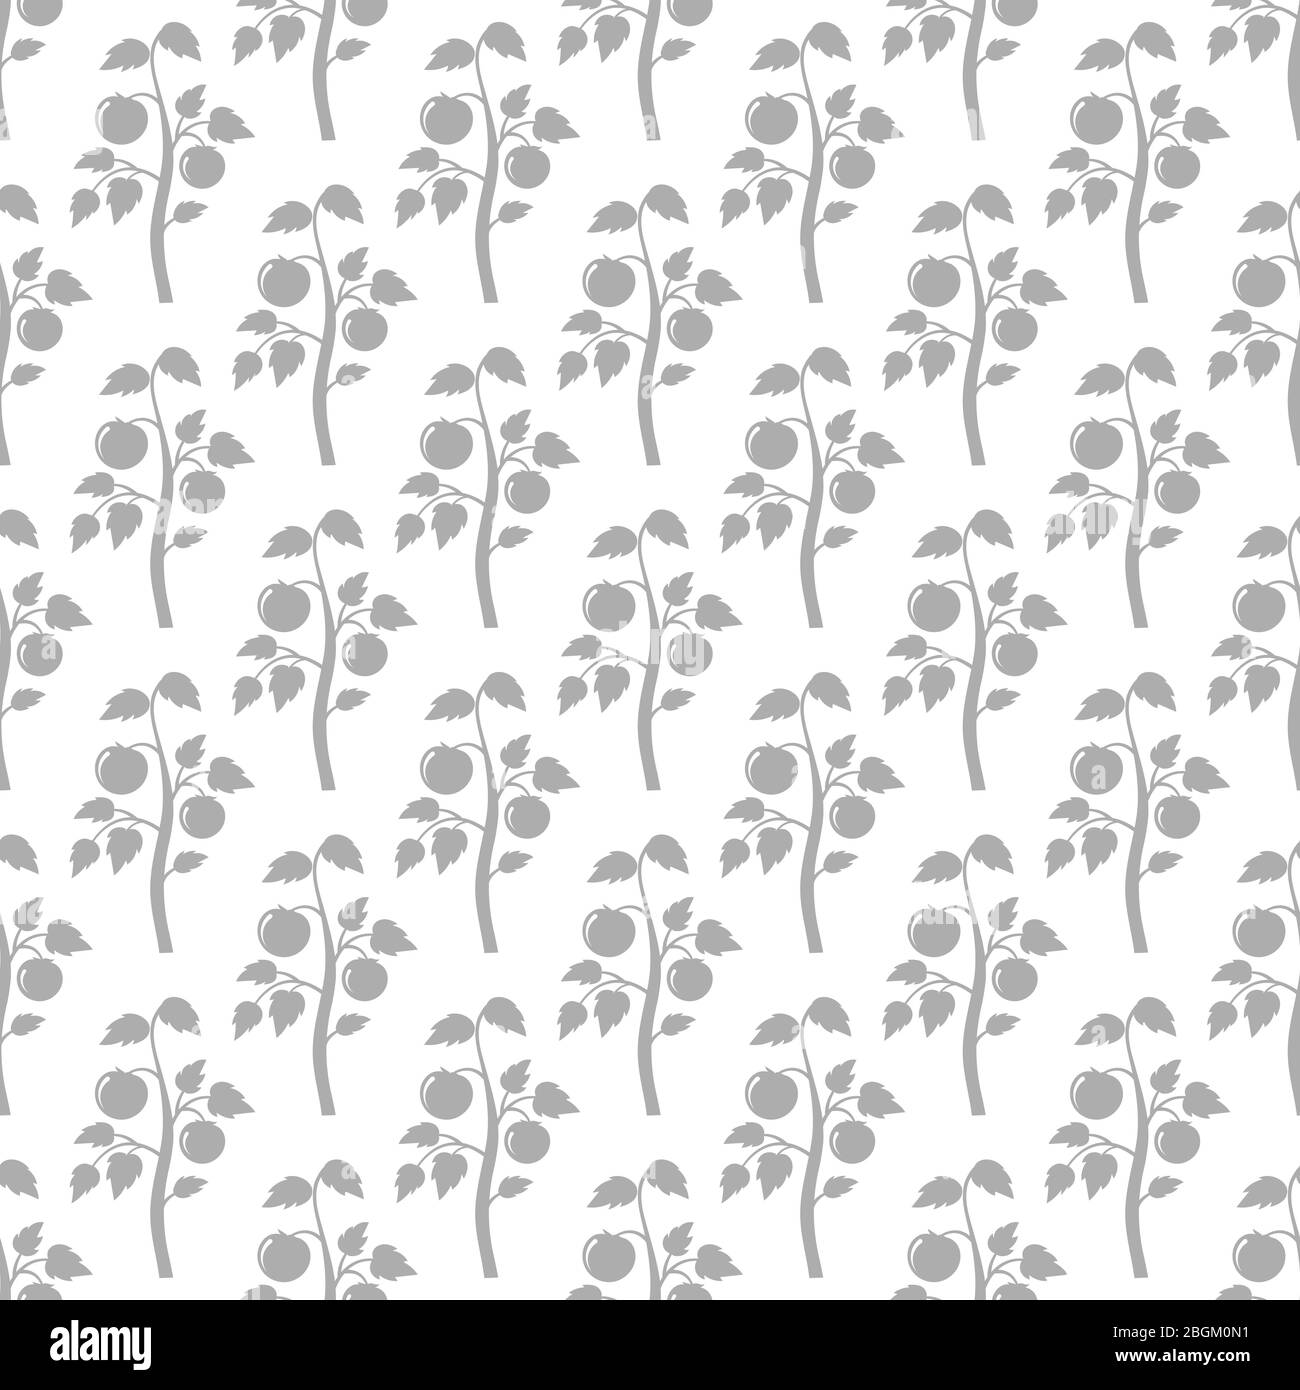 Grey tomato plant seamless pattern. Tomato silhouettes harvest background. Vector illustration Stock Vector